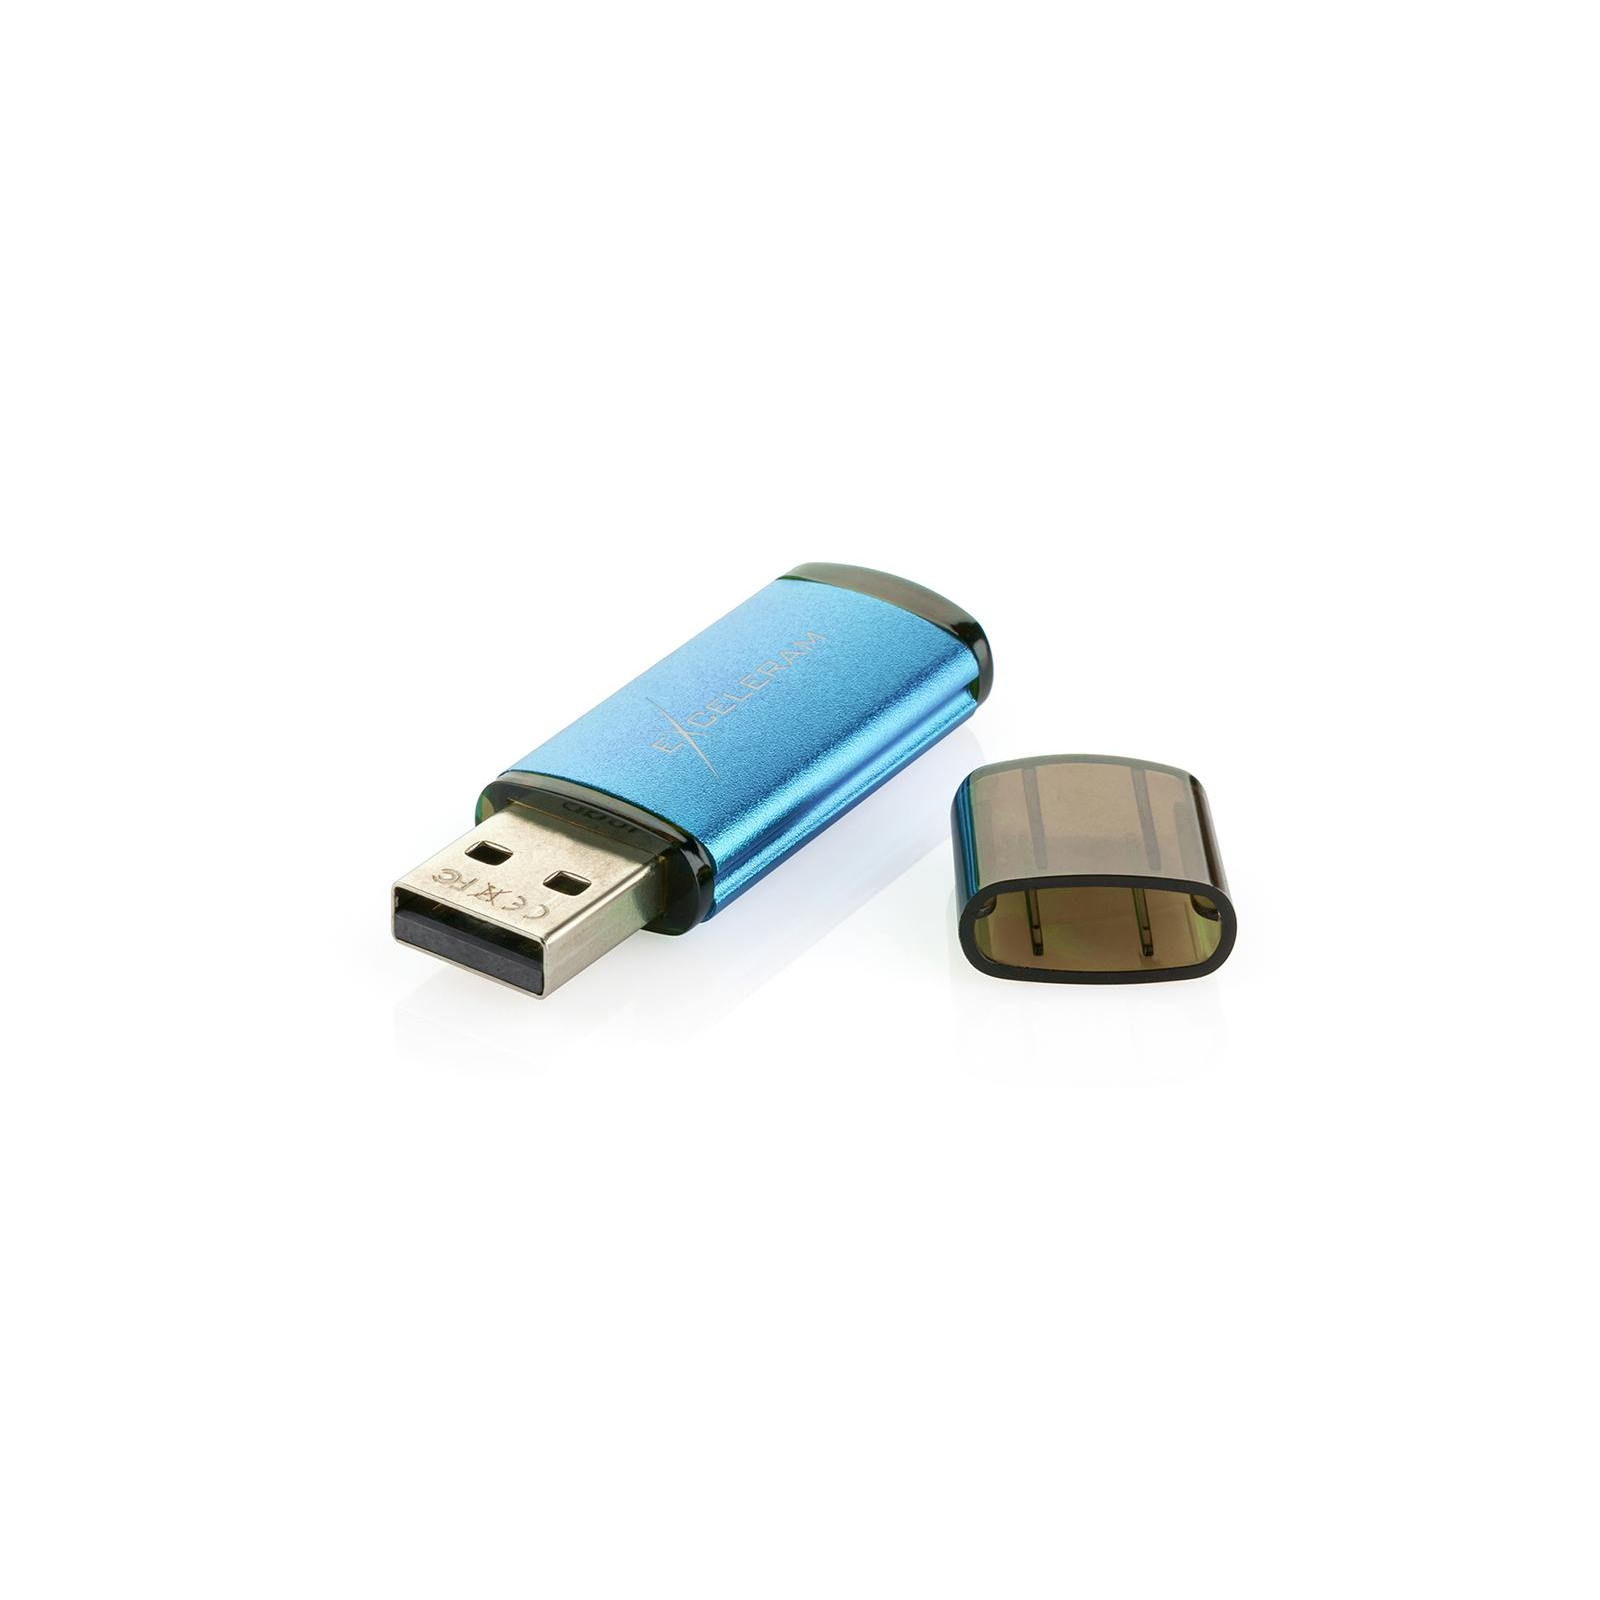 USB флеш накопитель eXceleram 16GB A3 Series Blue USB 2.0 (EXA3U2BL16) изображение 5